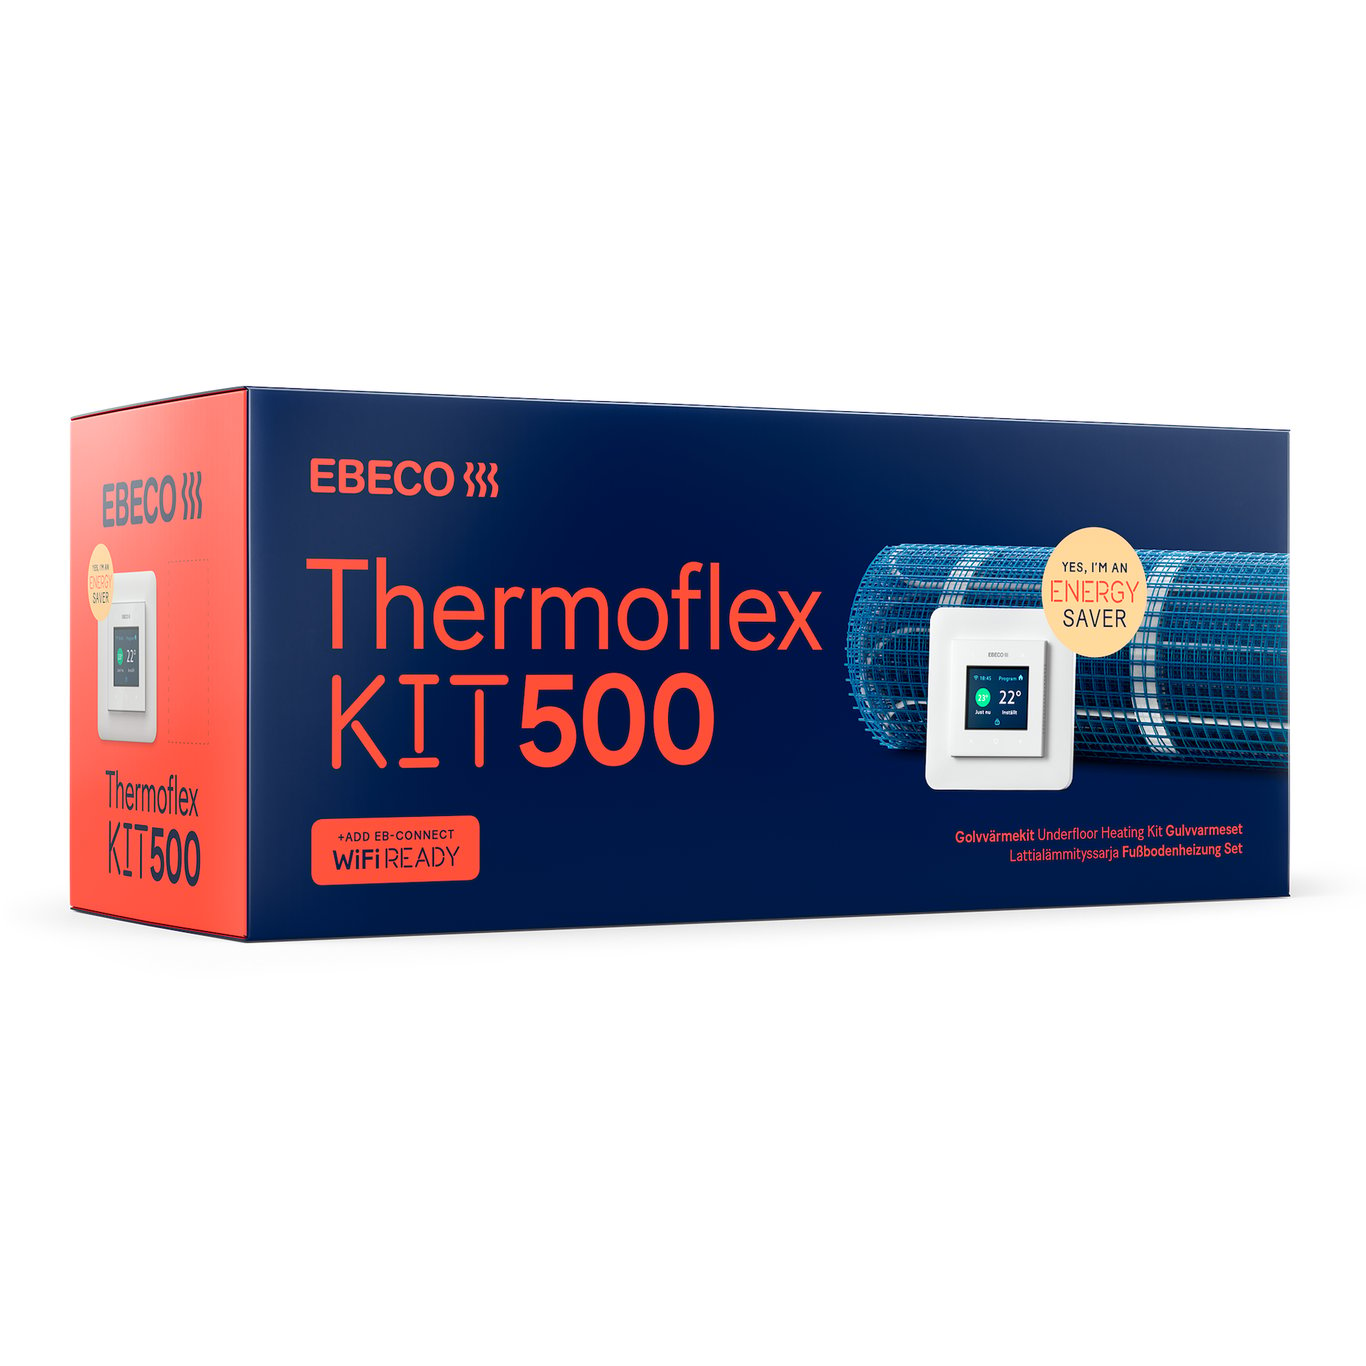 EBECO THERMOFLEX KIT 500 4,4M2 530W